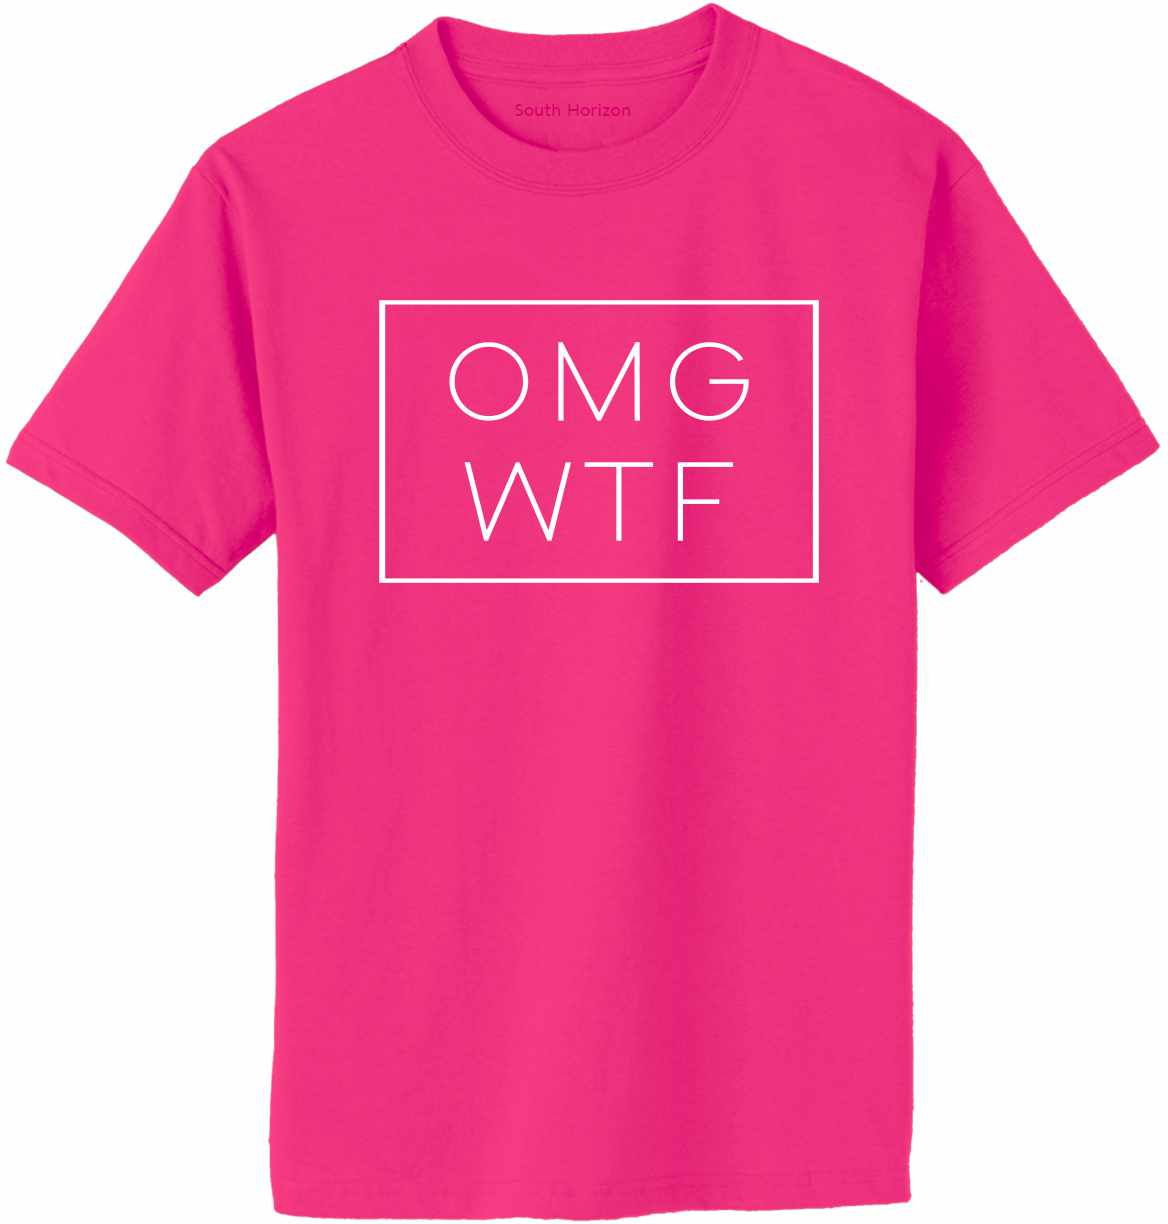 OMG WTF - Box on Adult T-Shirt (#1254-1)